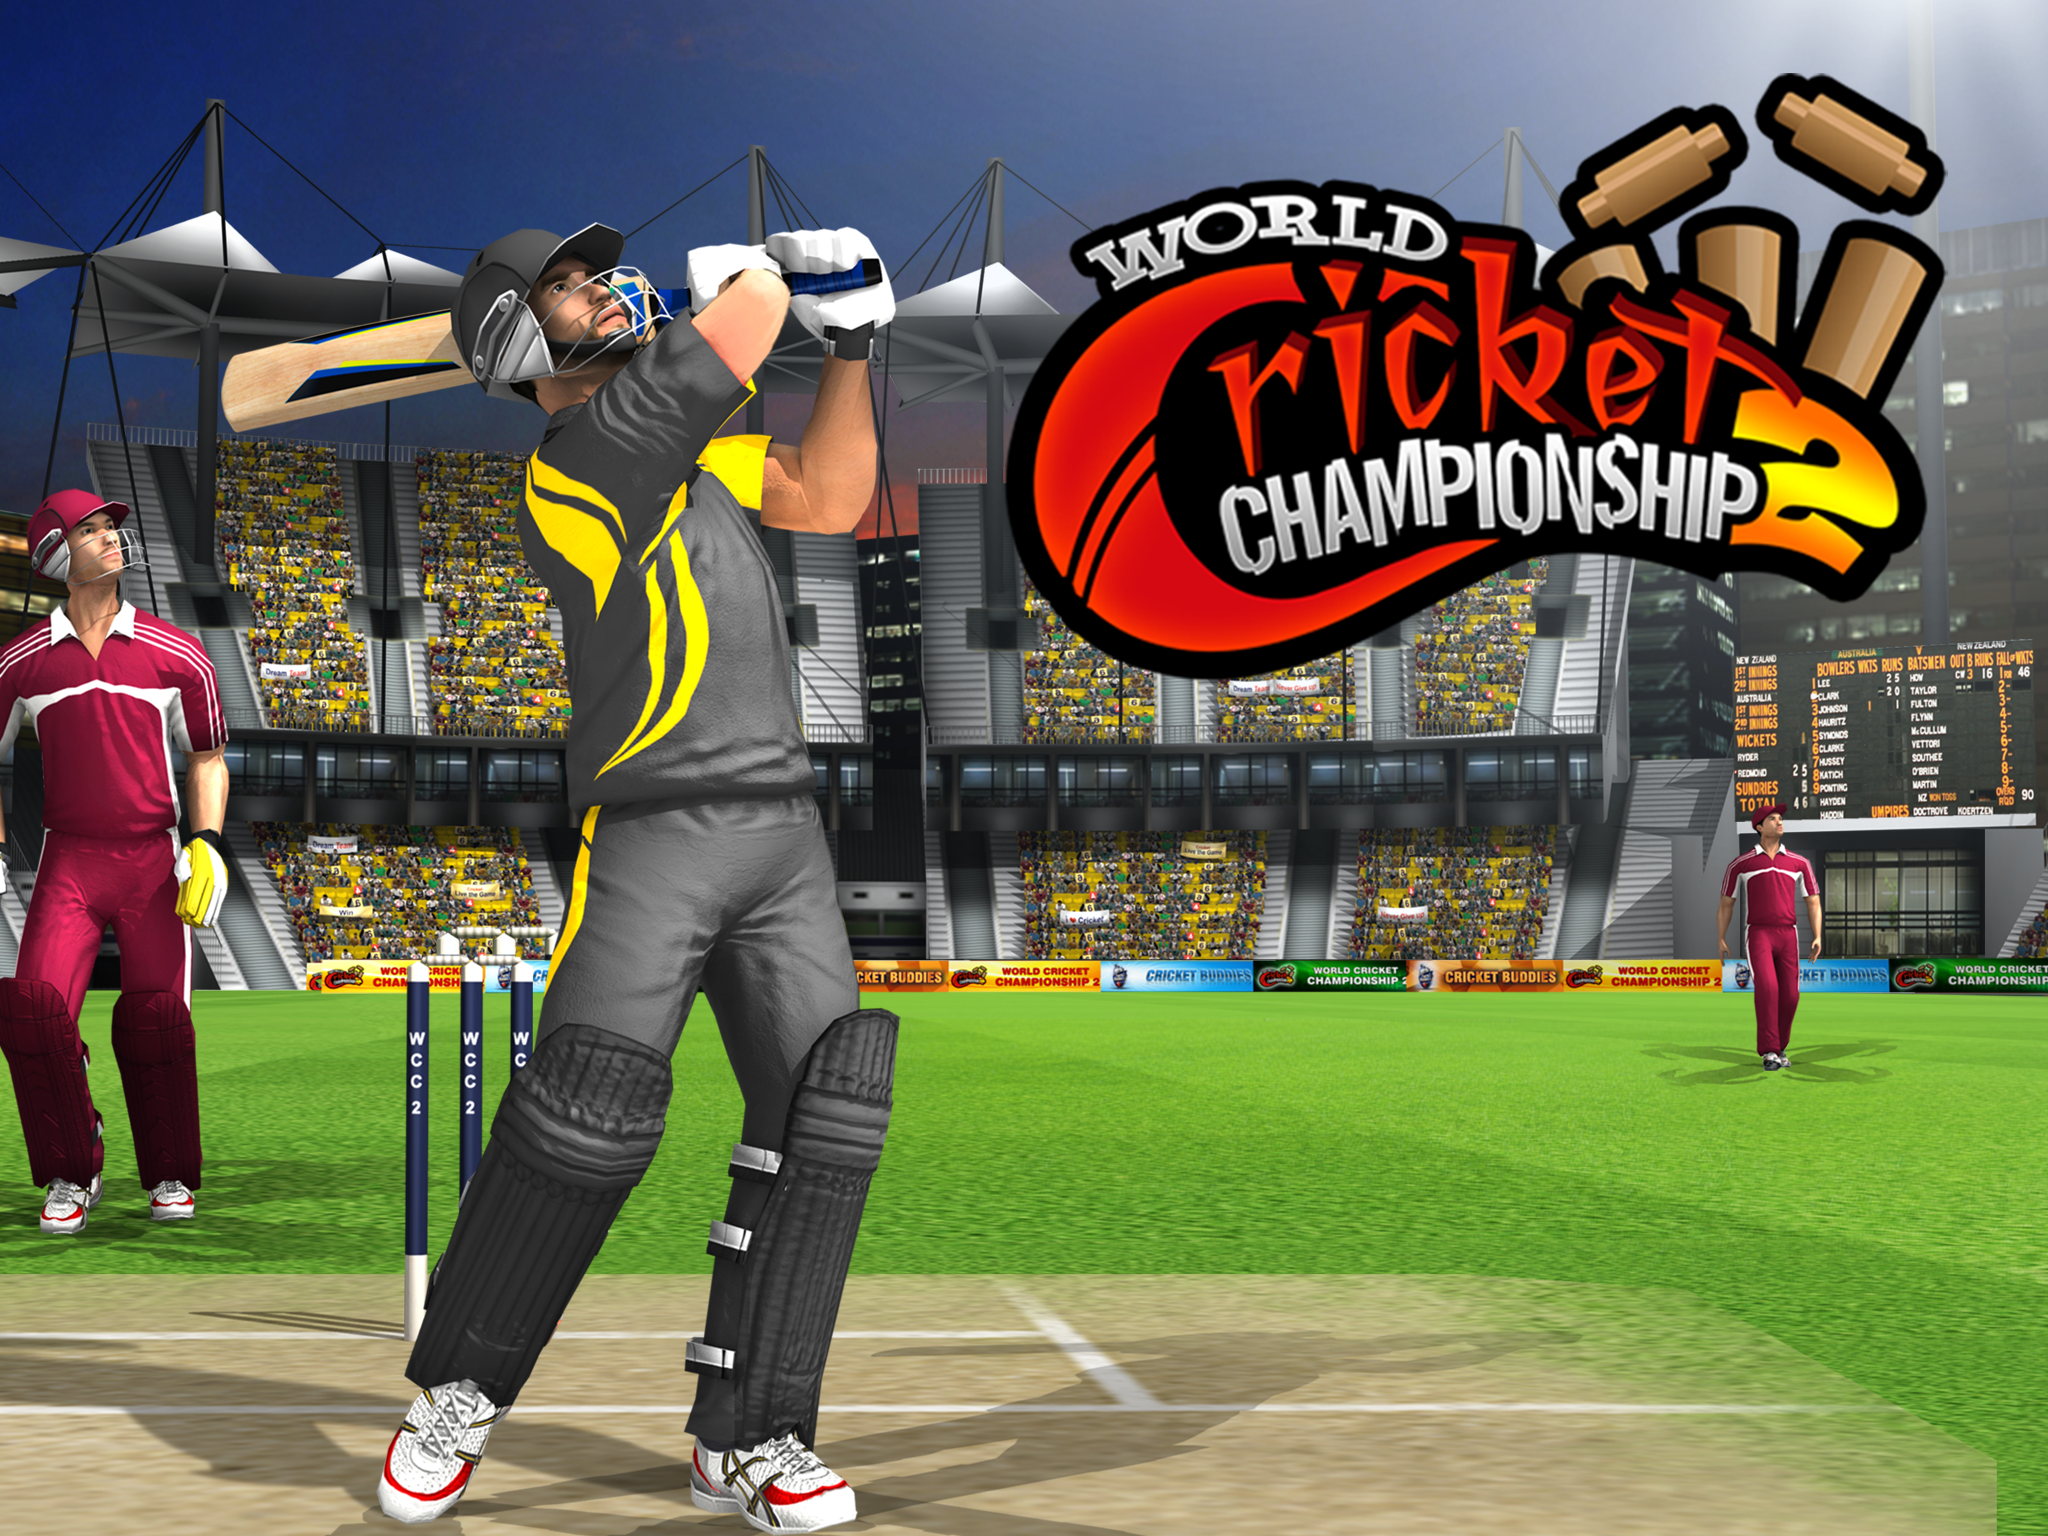 world cricket championship 2 apk download